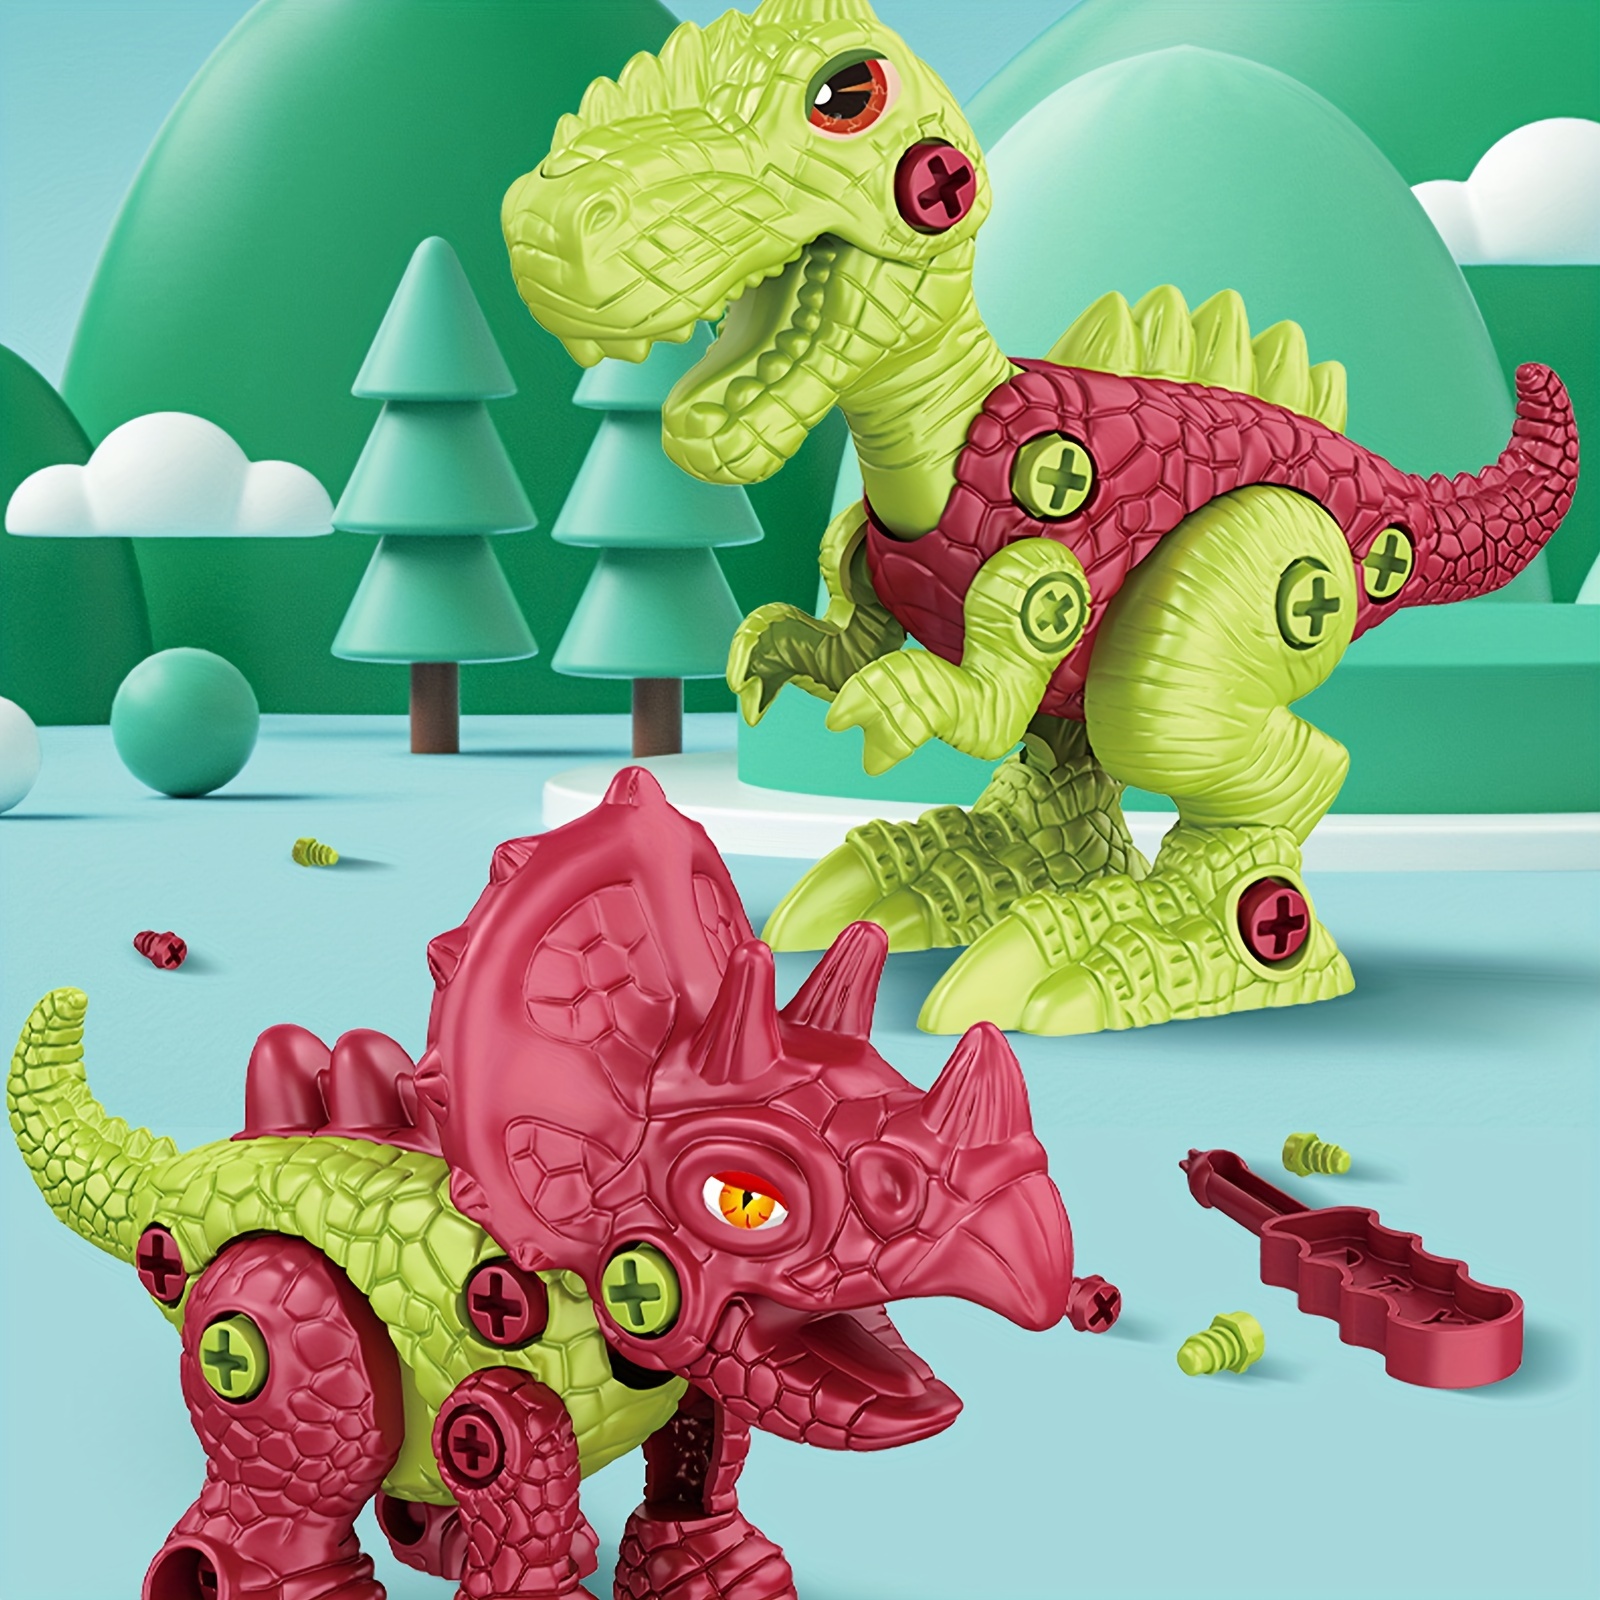 Gran bolsa de Dinosaurios de colores de juguete